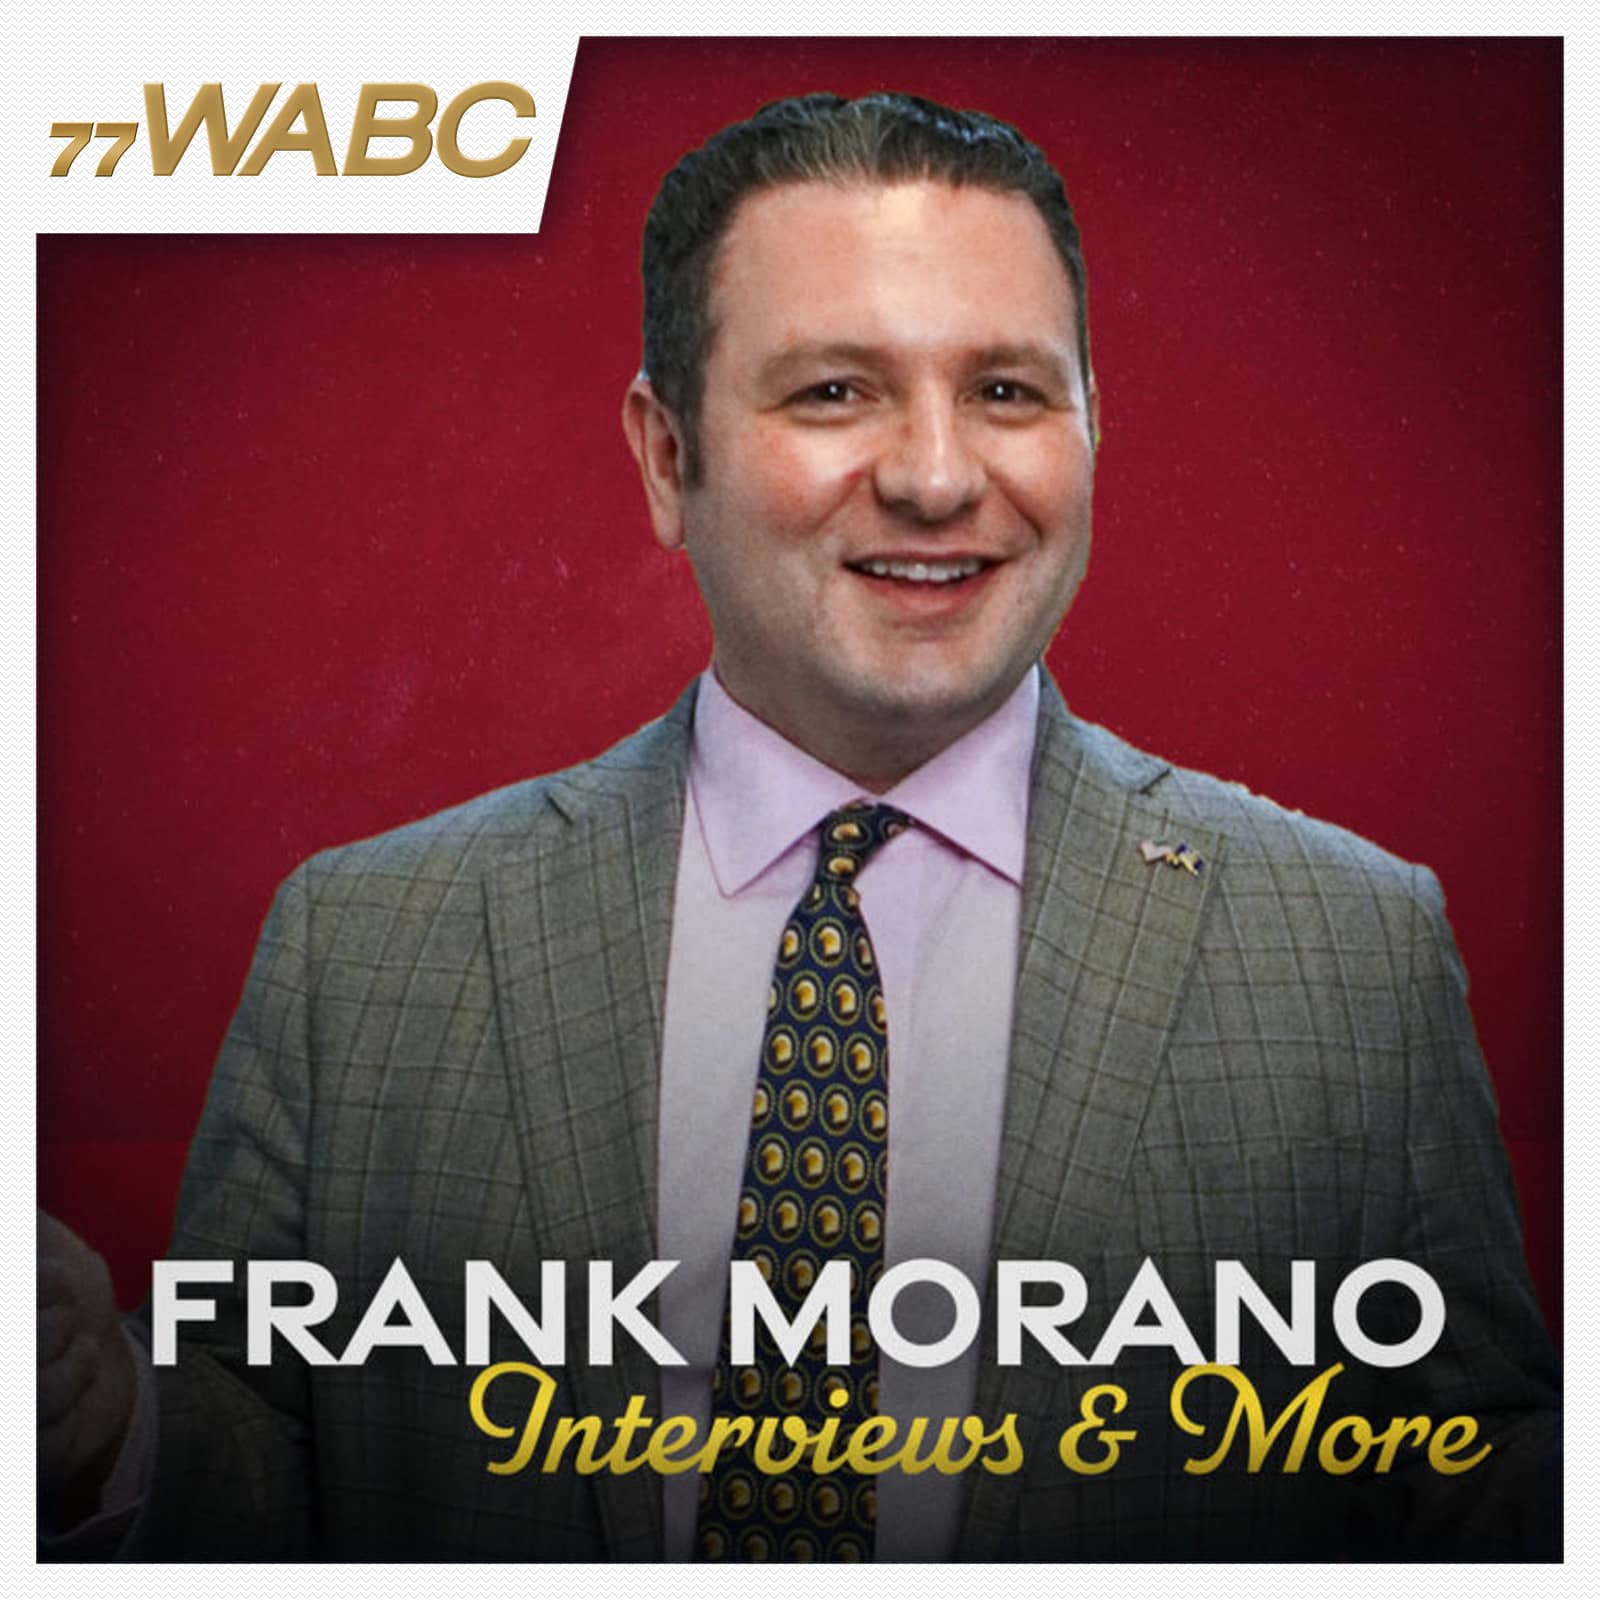 frank-morano-interviews-and-more-podcast-new-logo990948